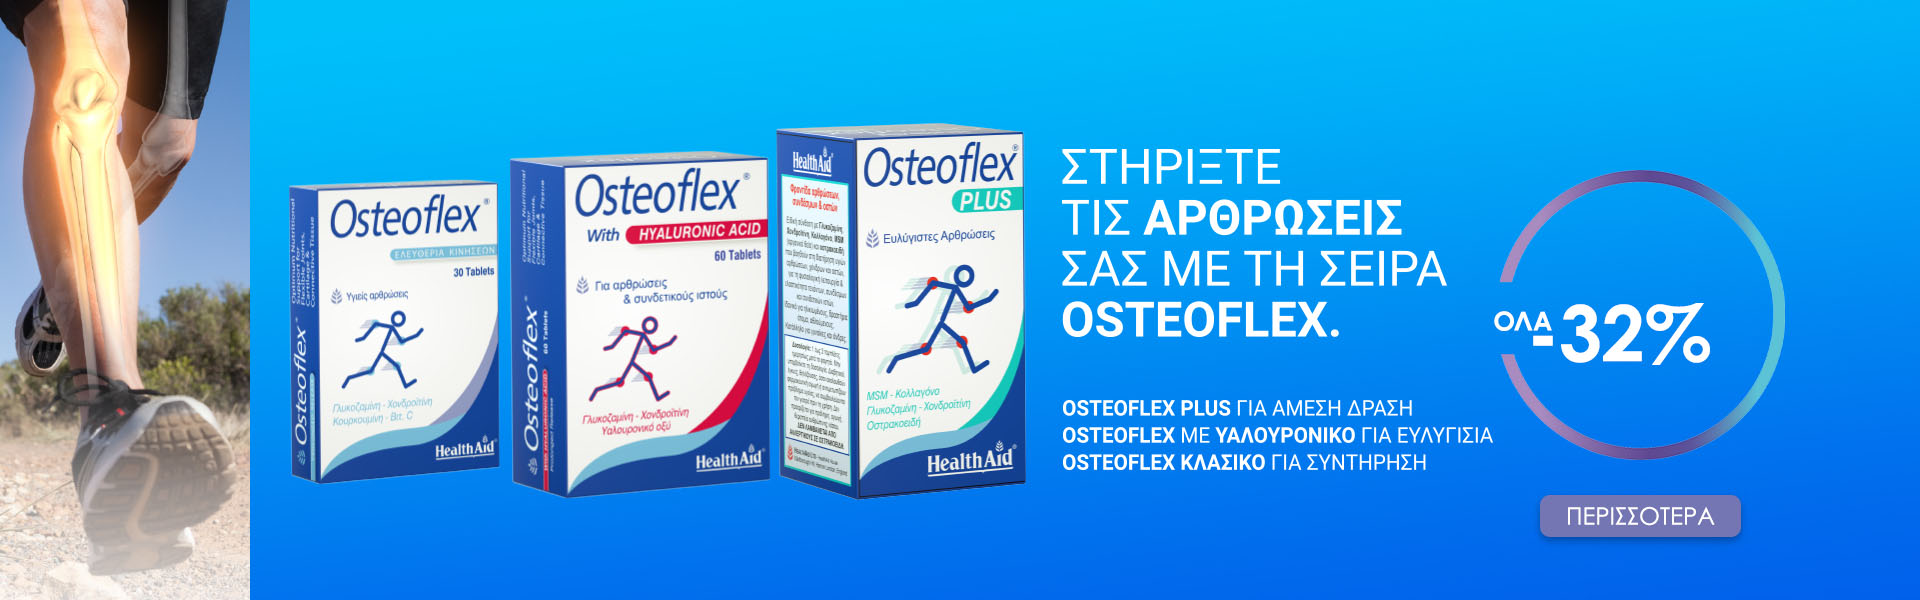 Osteoflex ΟΛΑ -32%